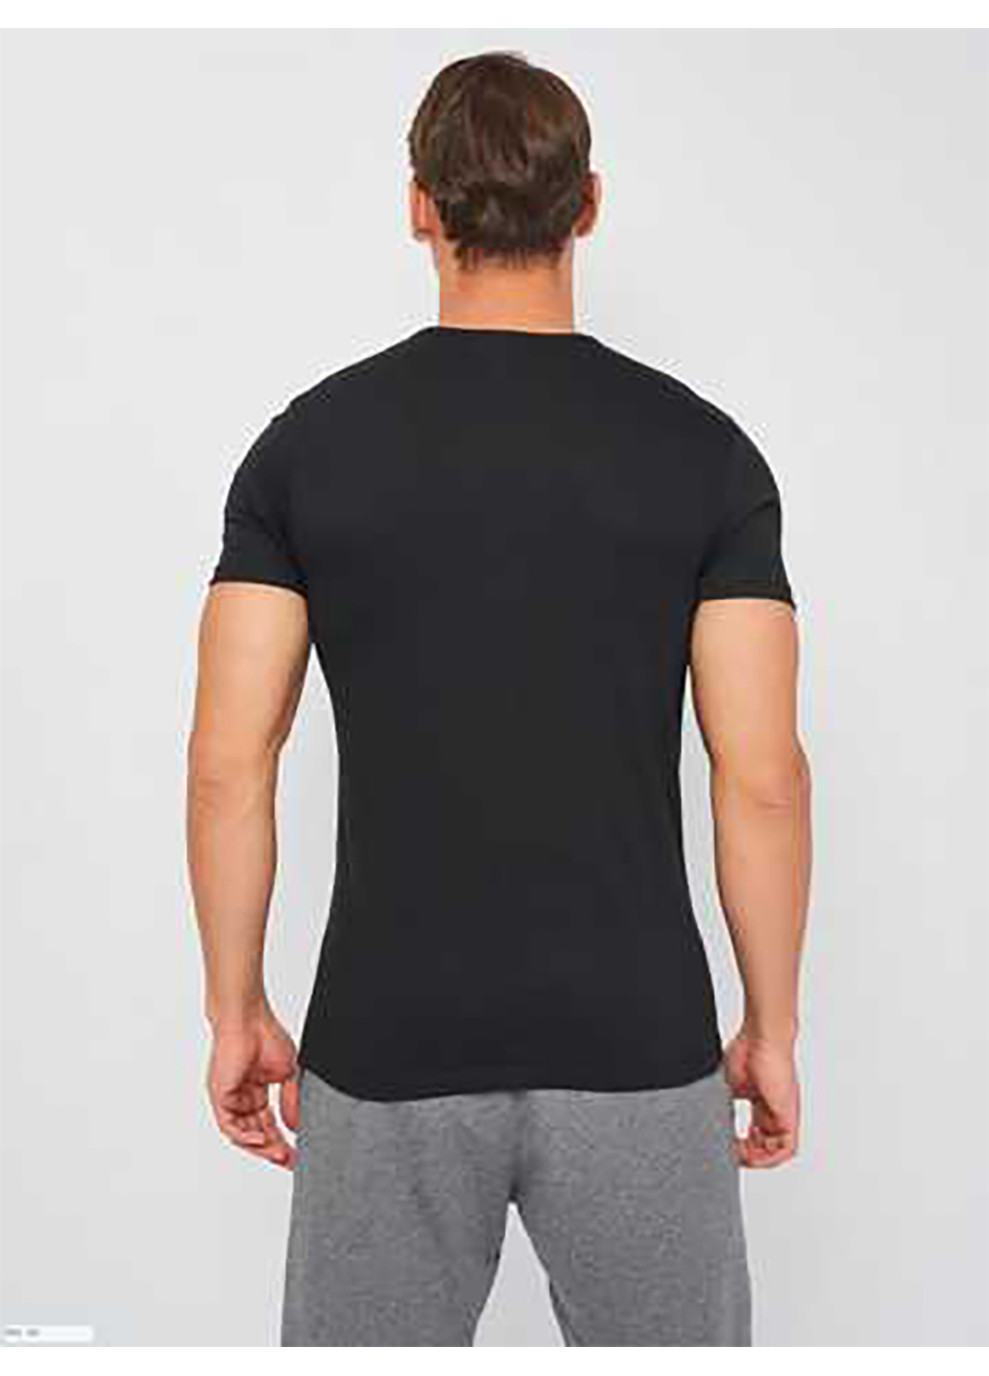 Чорна футболка t-shirt mezza manica girocollo stampa logo petto чорний xl чоловік k1335 nero-xl Kappa